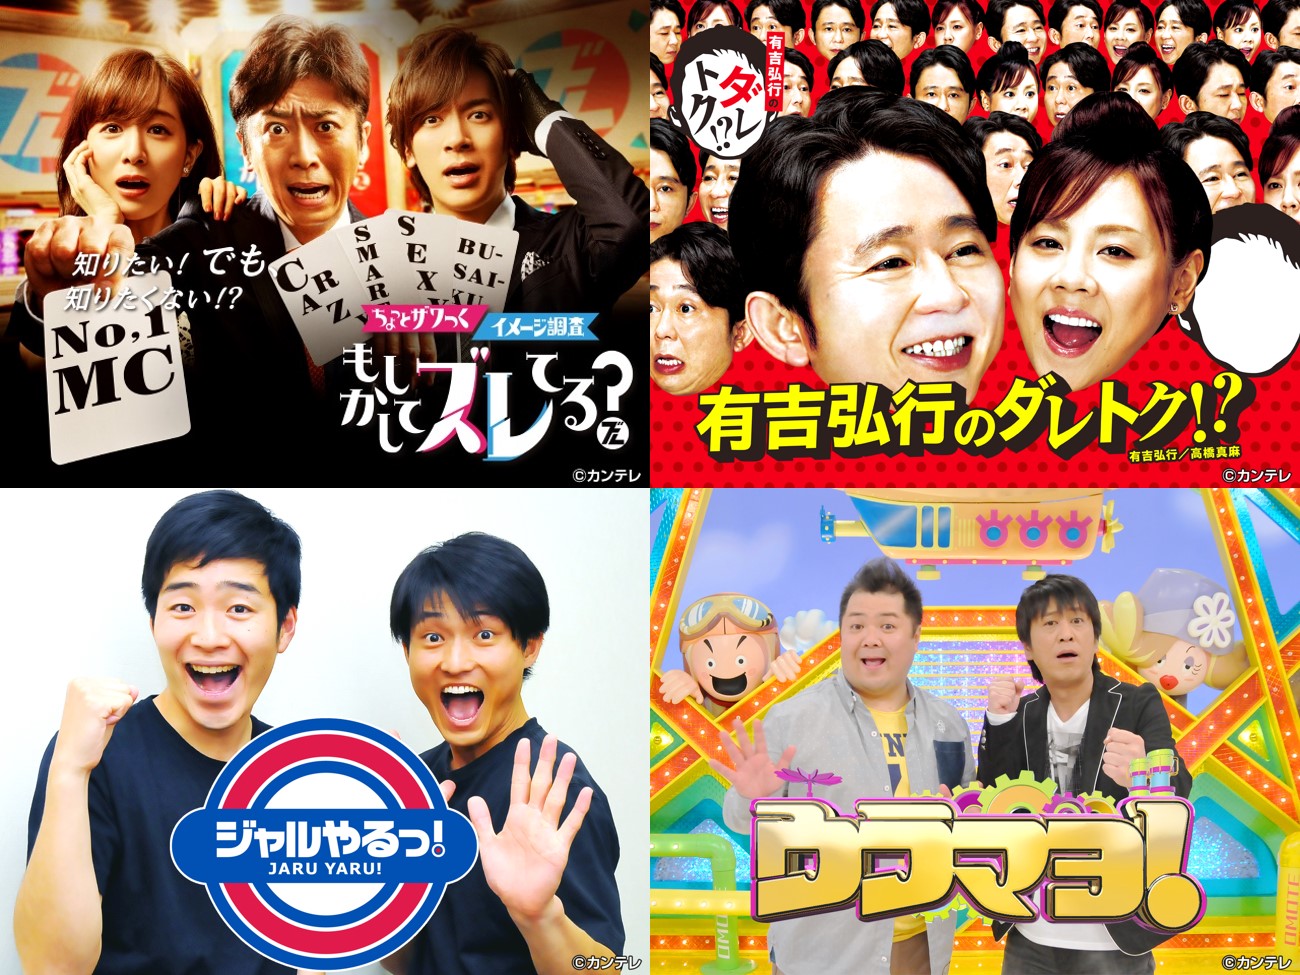 Gyao にて関西テレビの人気番組を独占無料配信開始 株式会社gyaoのプレスリリース